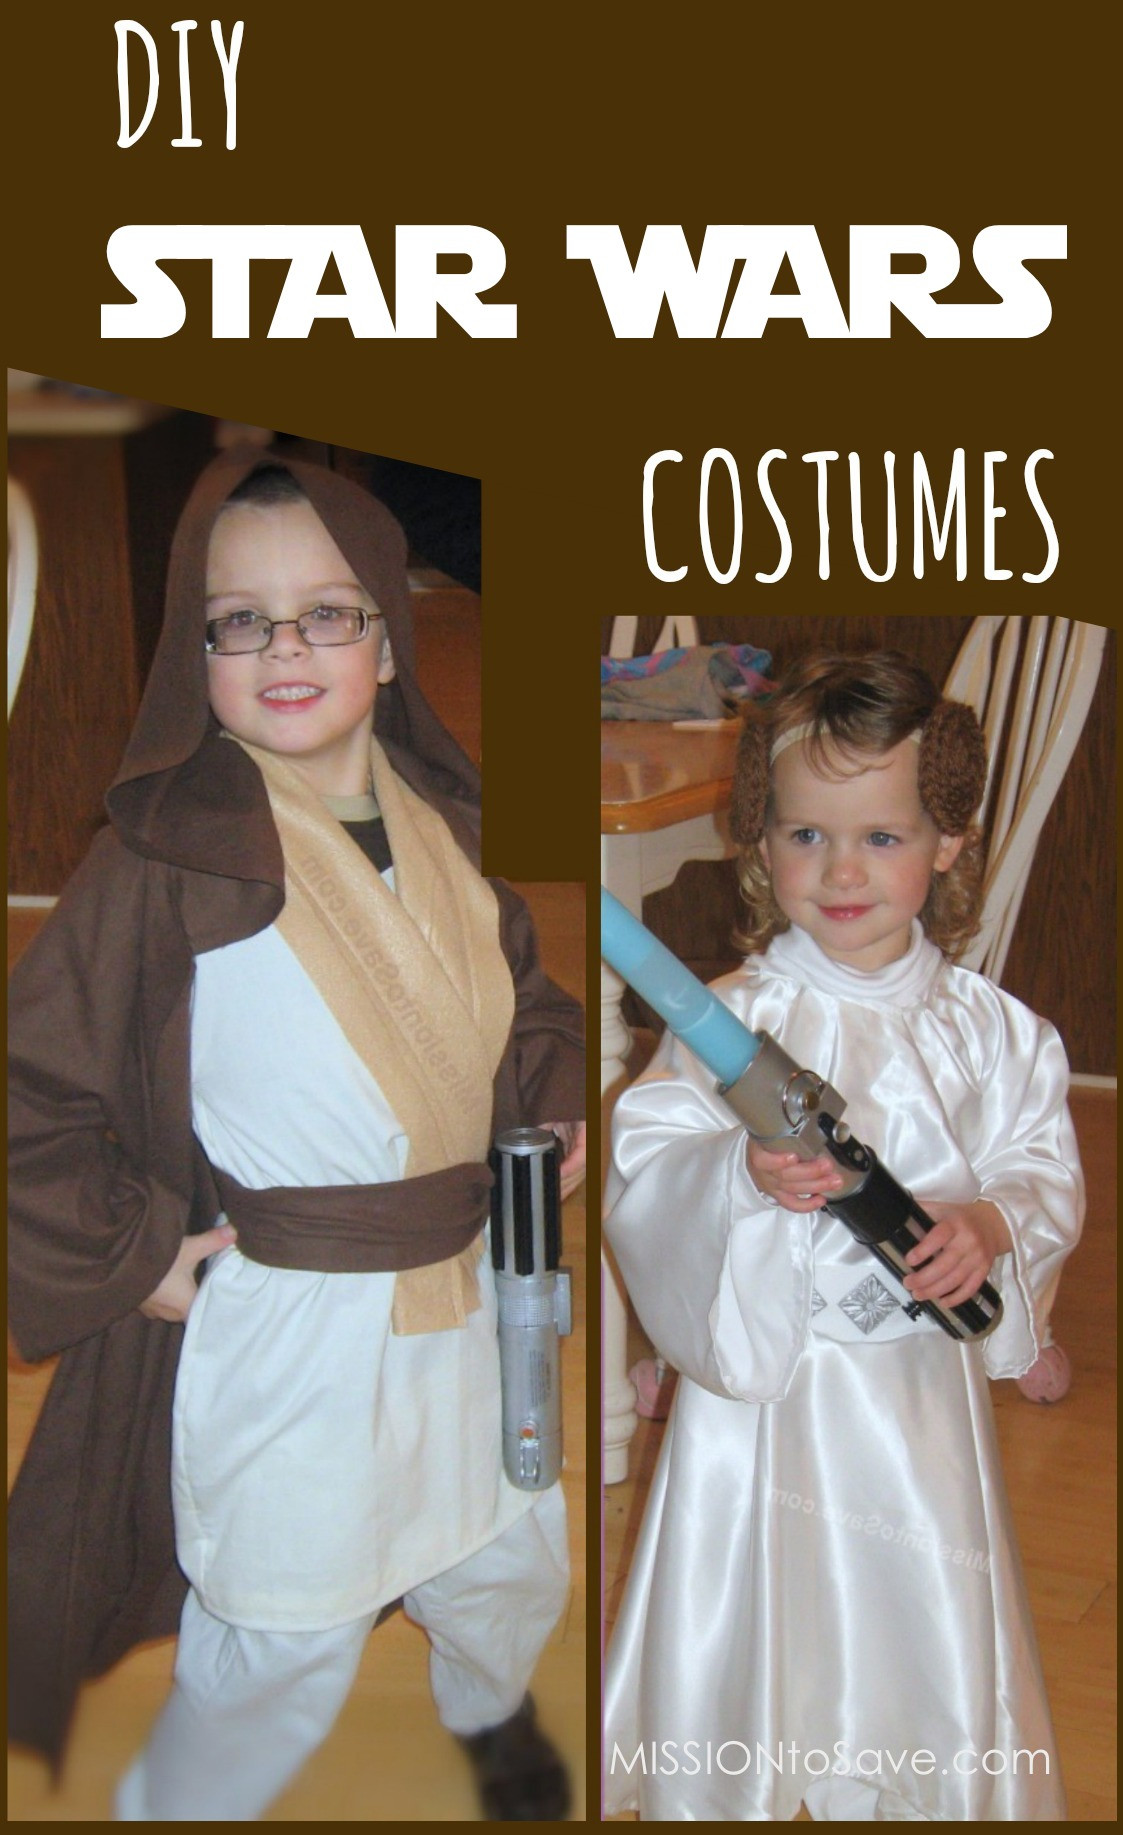 DIY Star Wars Costumes
 DIY Star Wars Costumes Jedi and Princess Leia Mission